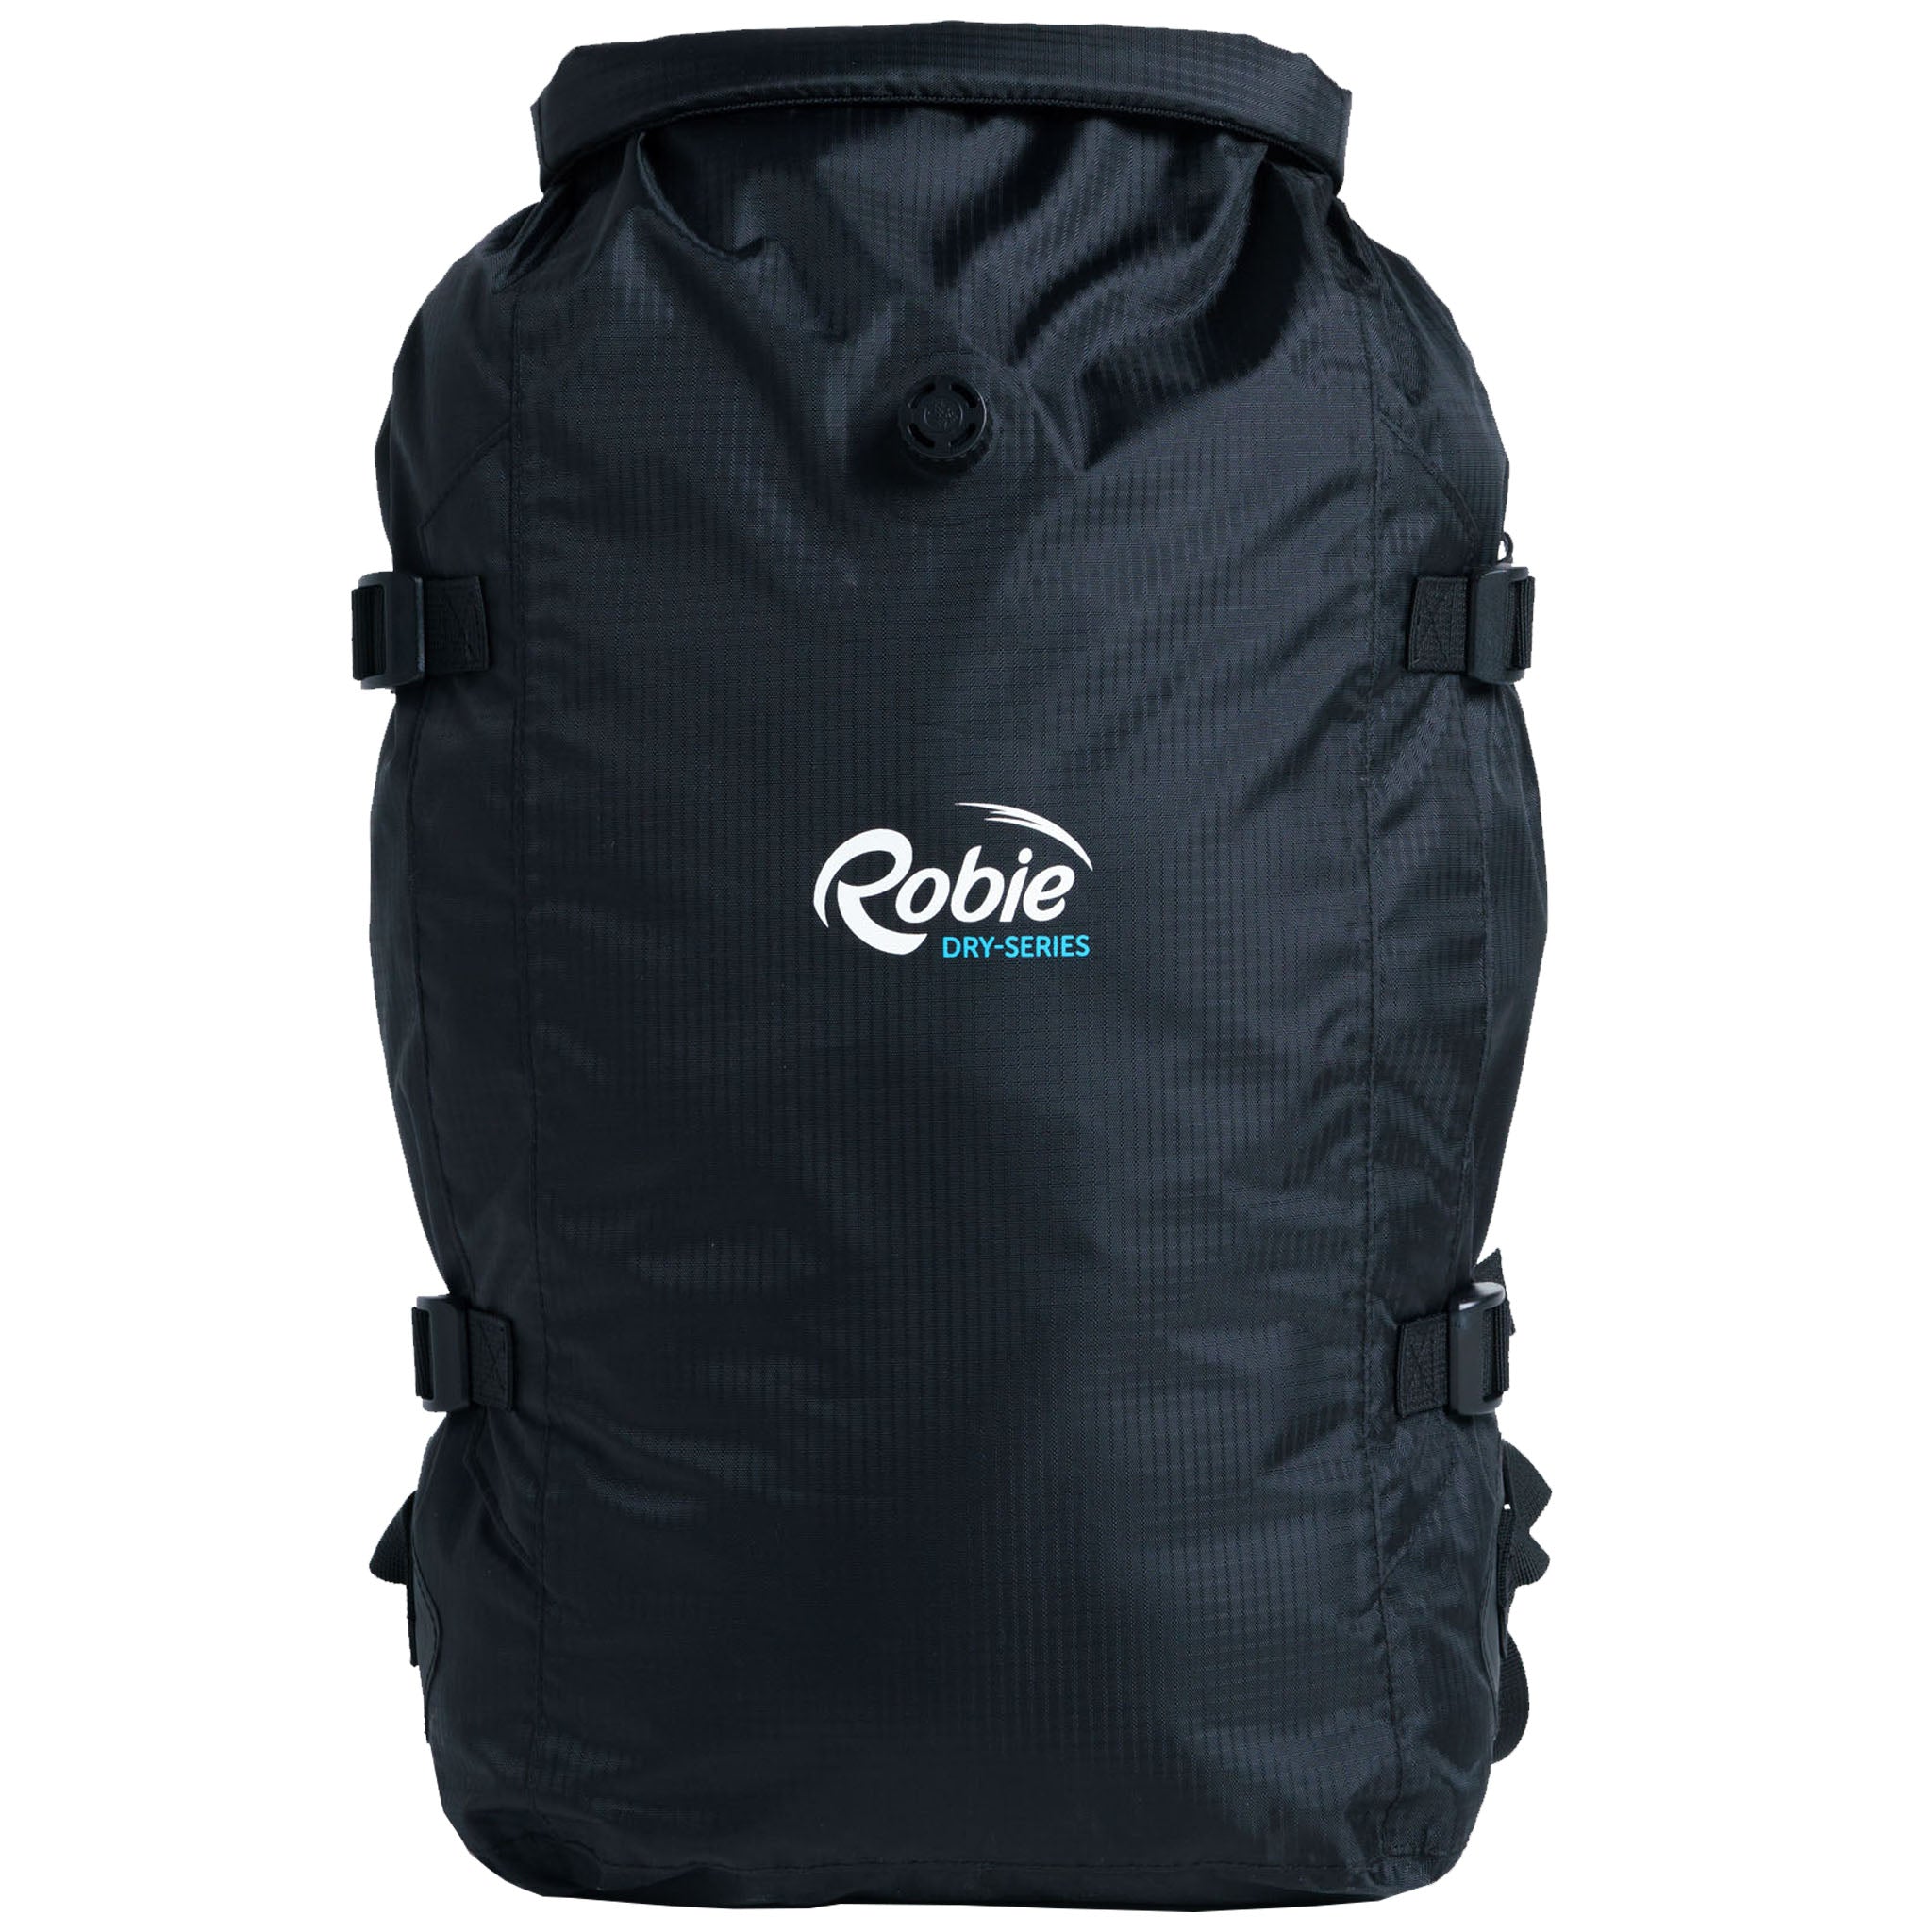 Robie Dry Series Back Pack Compression Bag